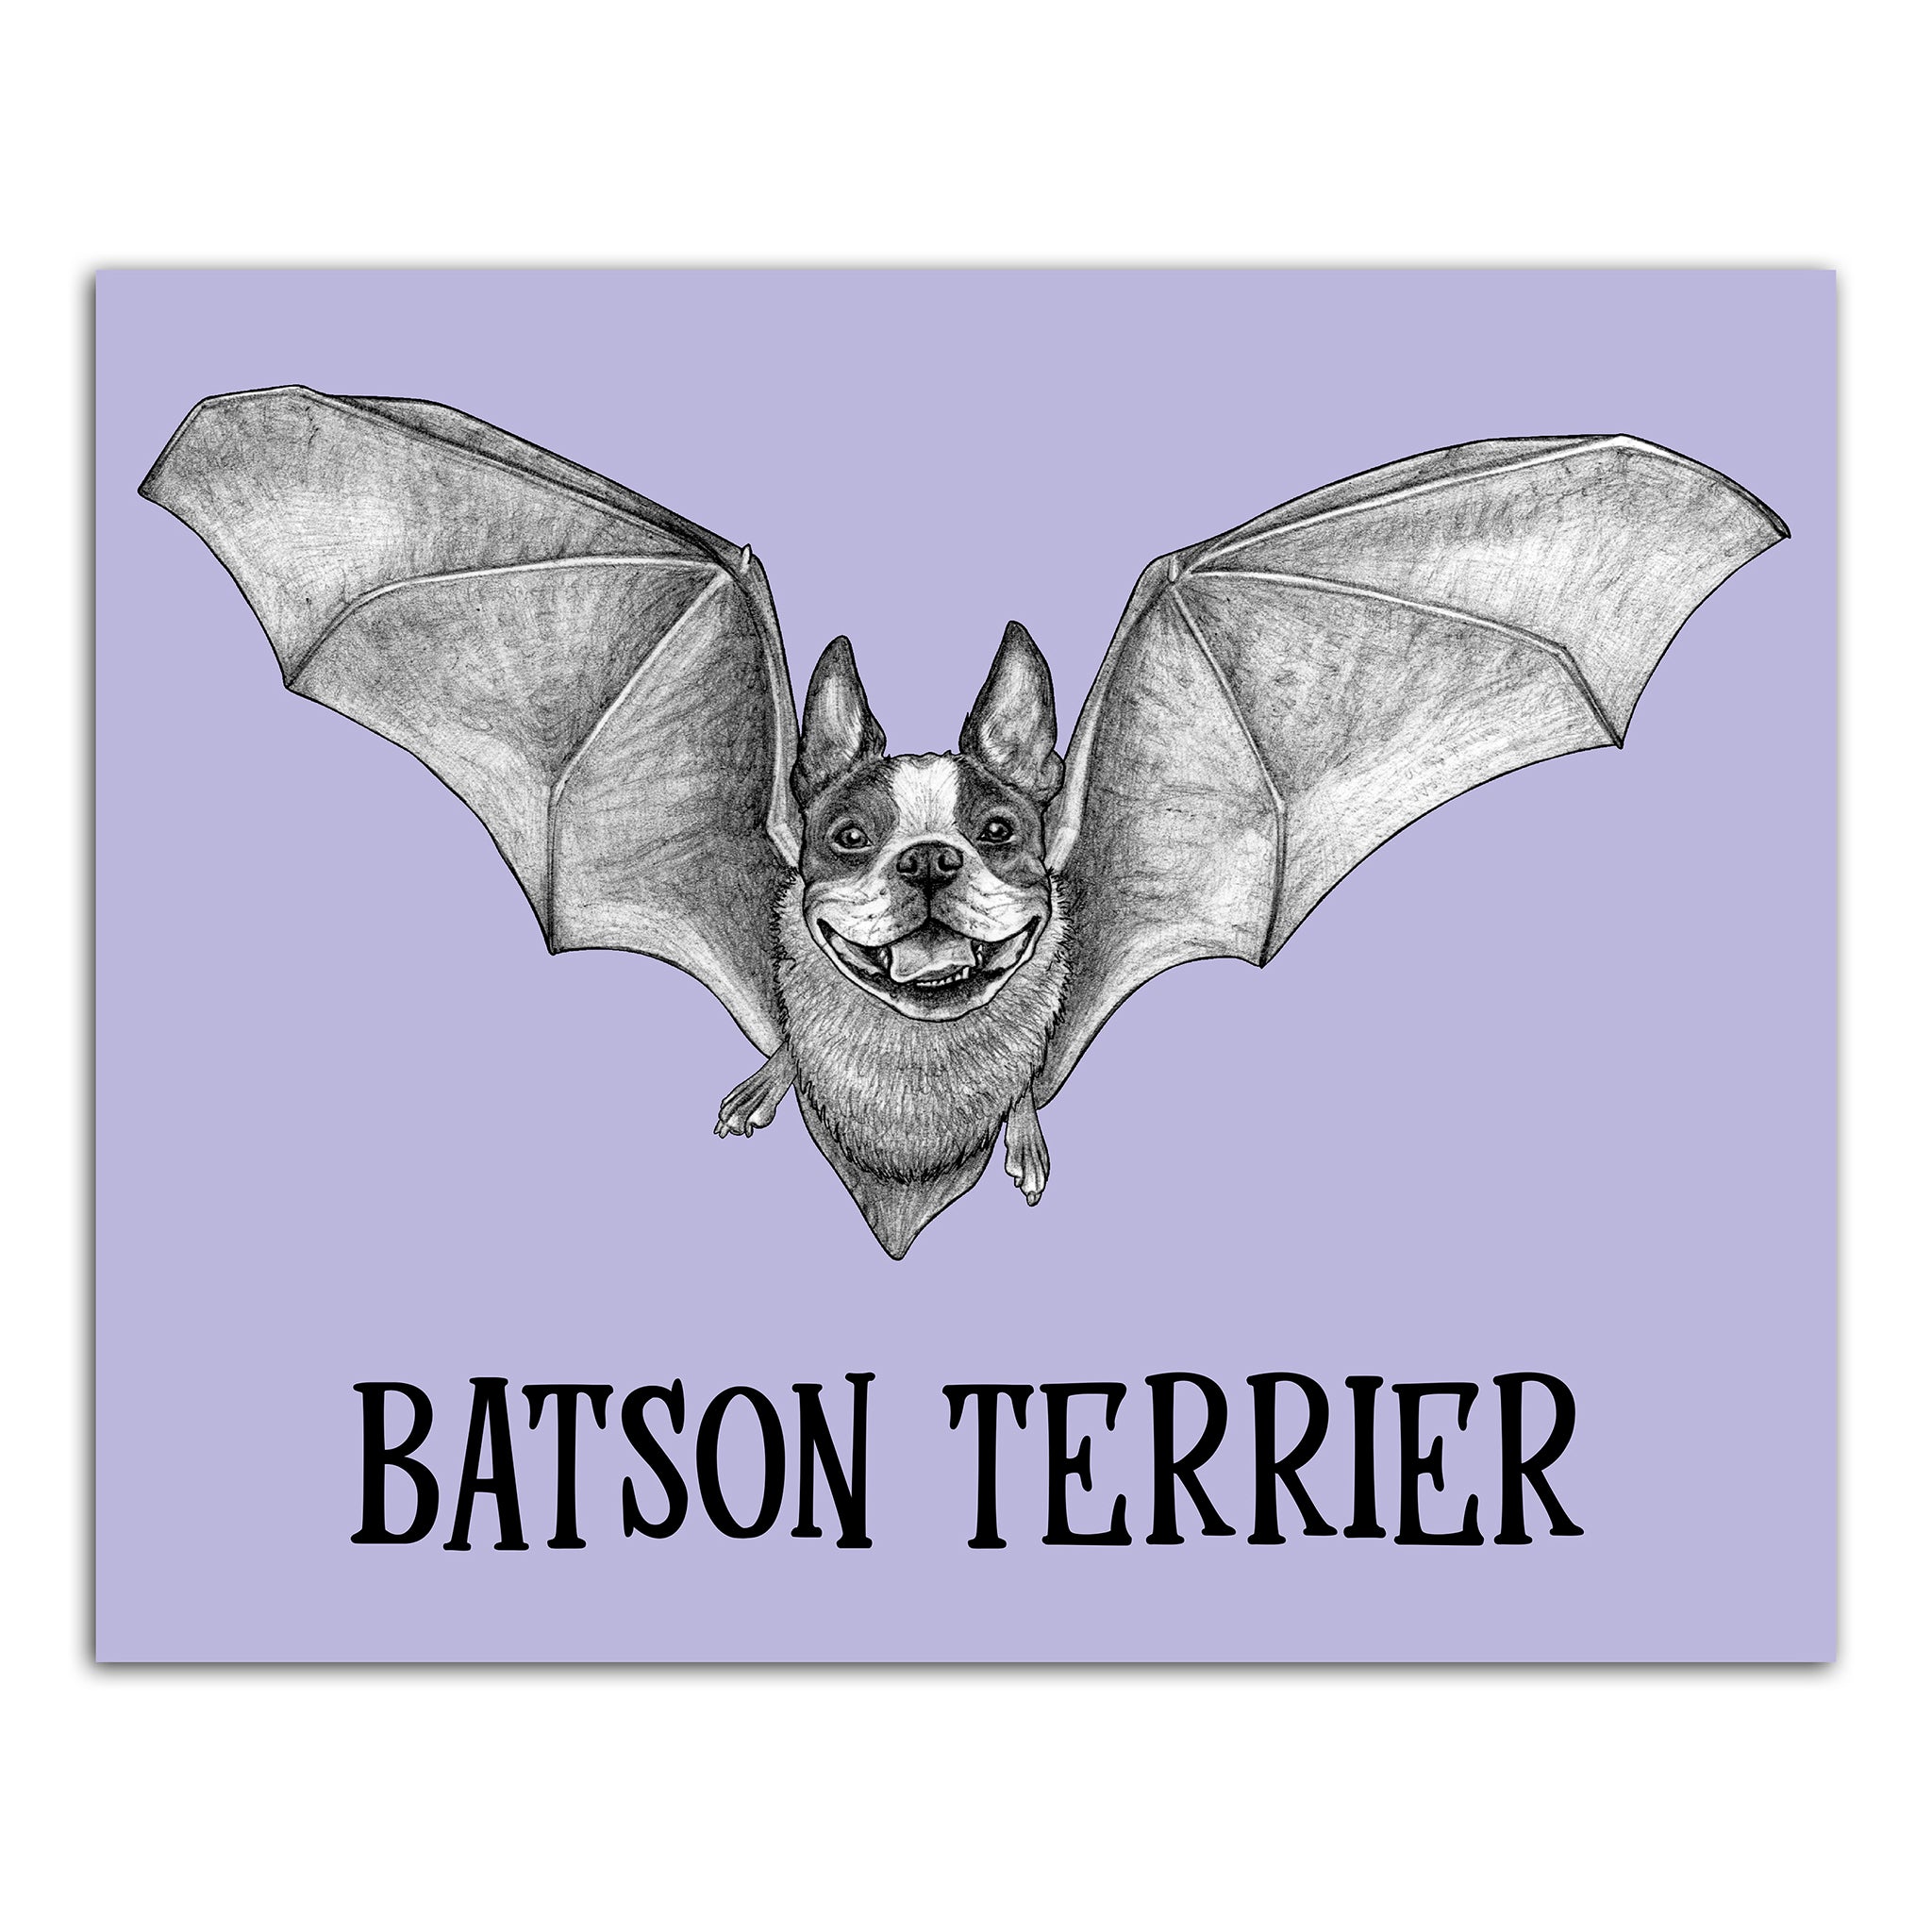 Batson Terrier | Boston Terrier + Bat Hybrid Animal | 8x10" Color Print